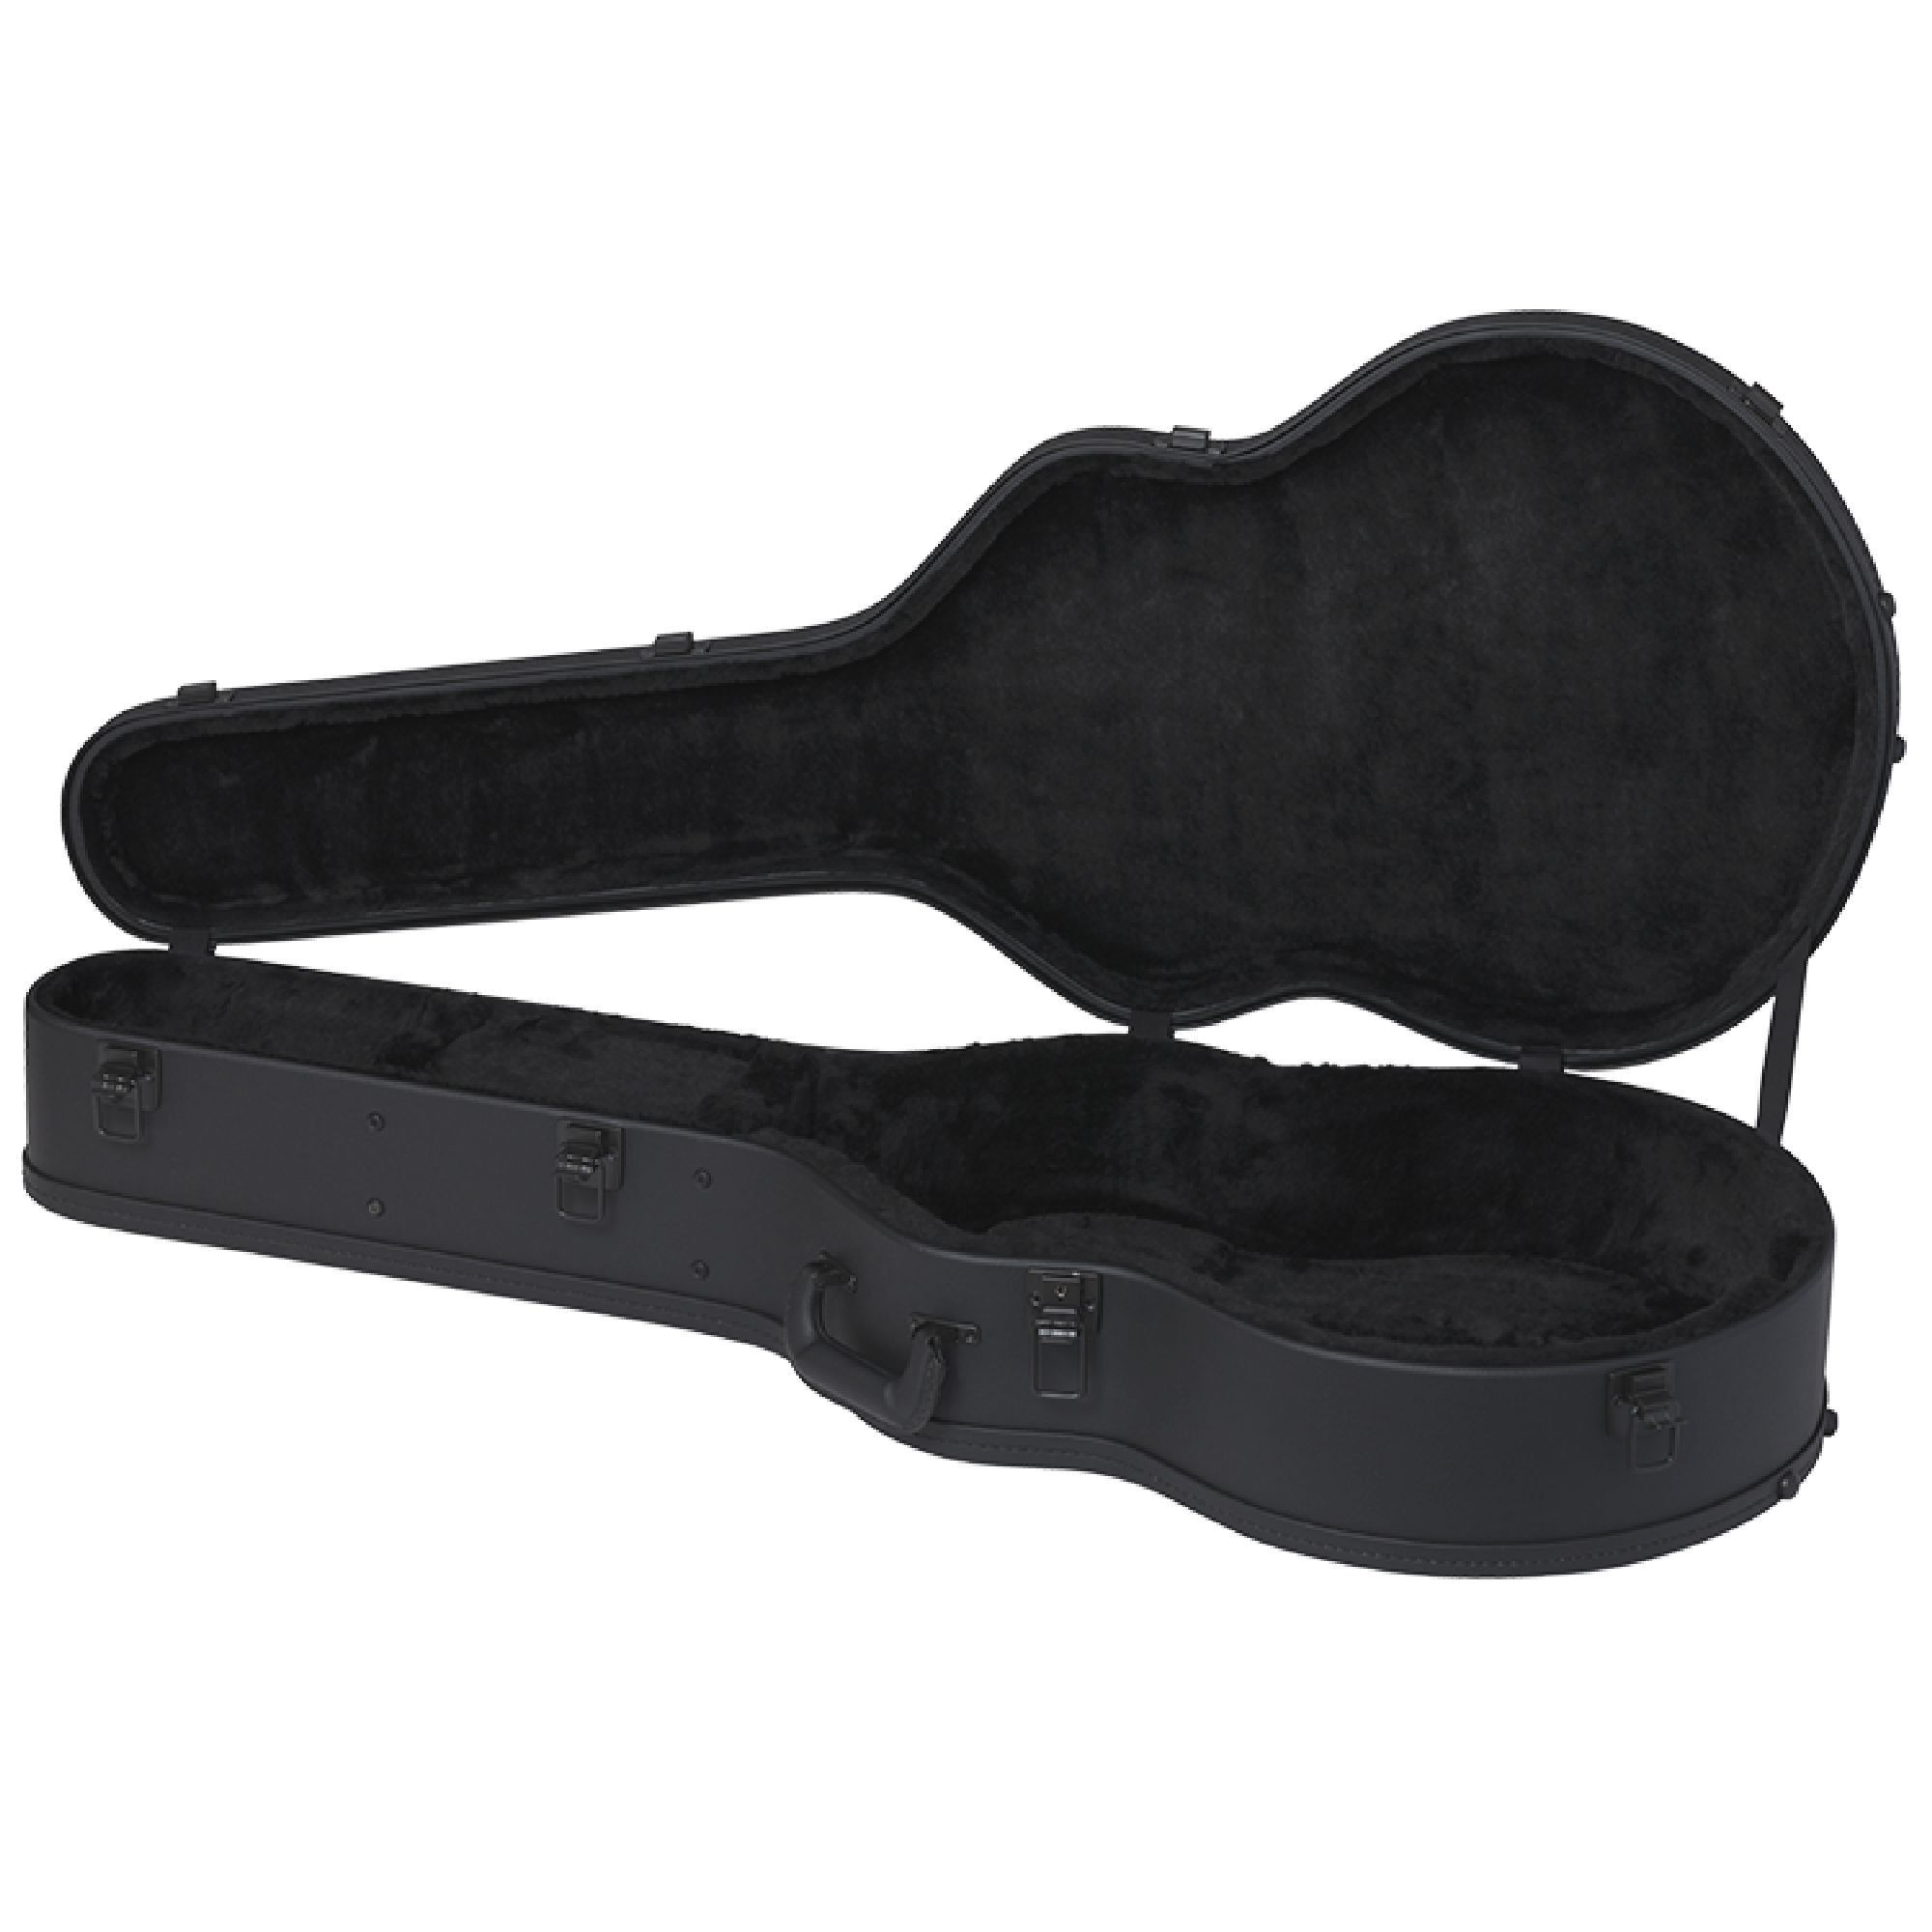 Gibson J-185 Modern Hardshell Case Black Чехлы и кейсы для акустических гитар